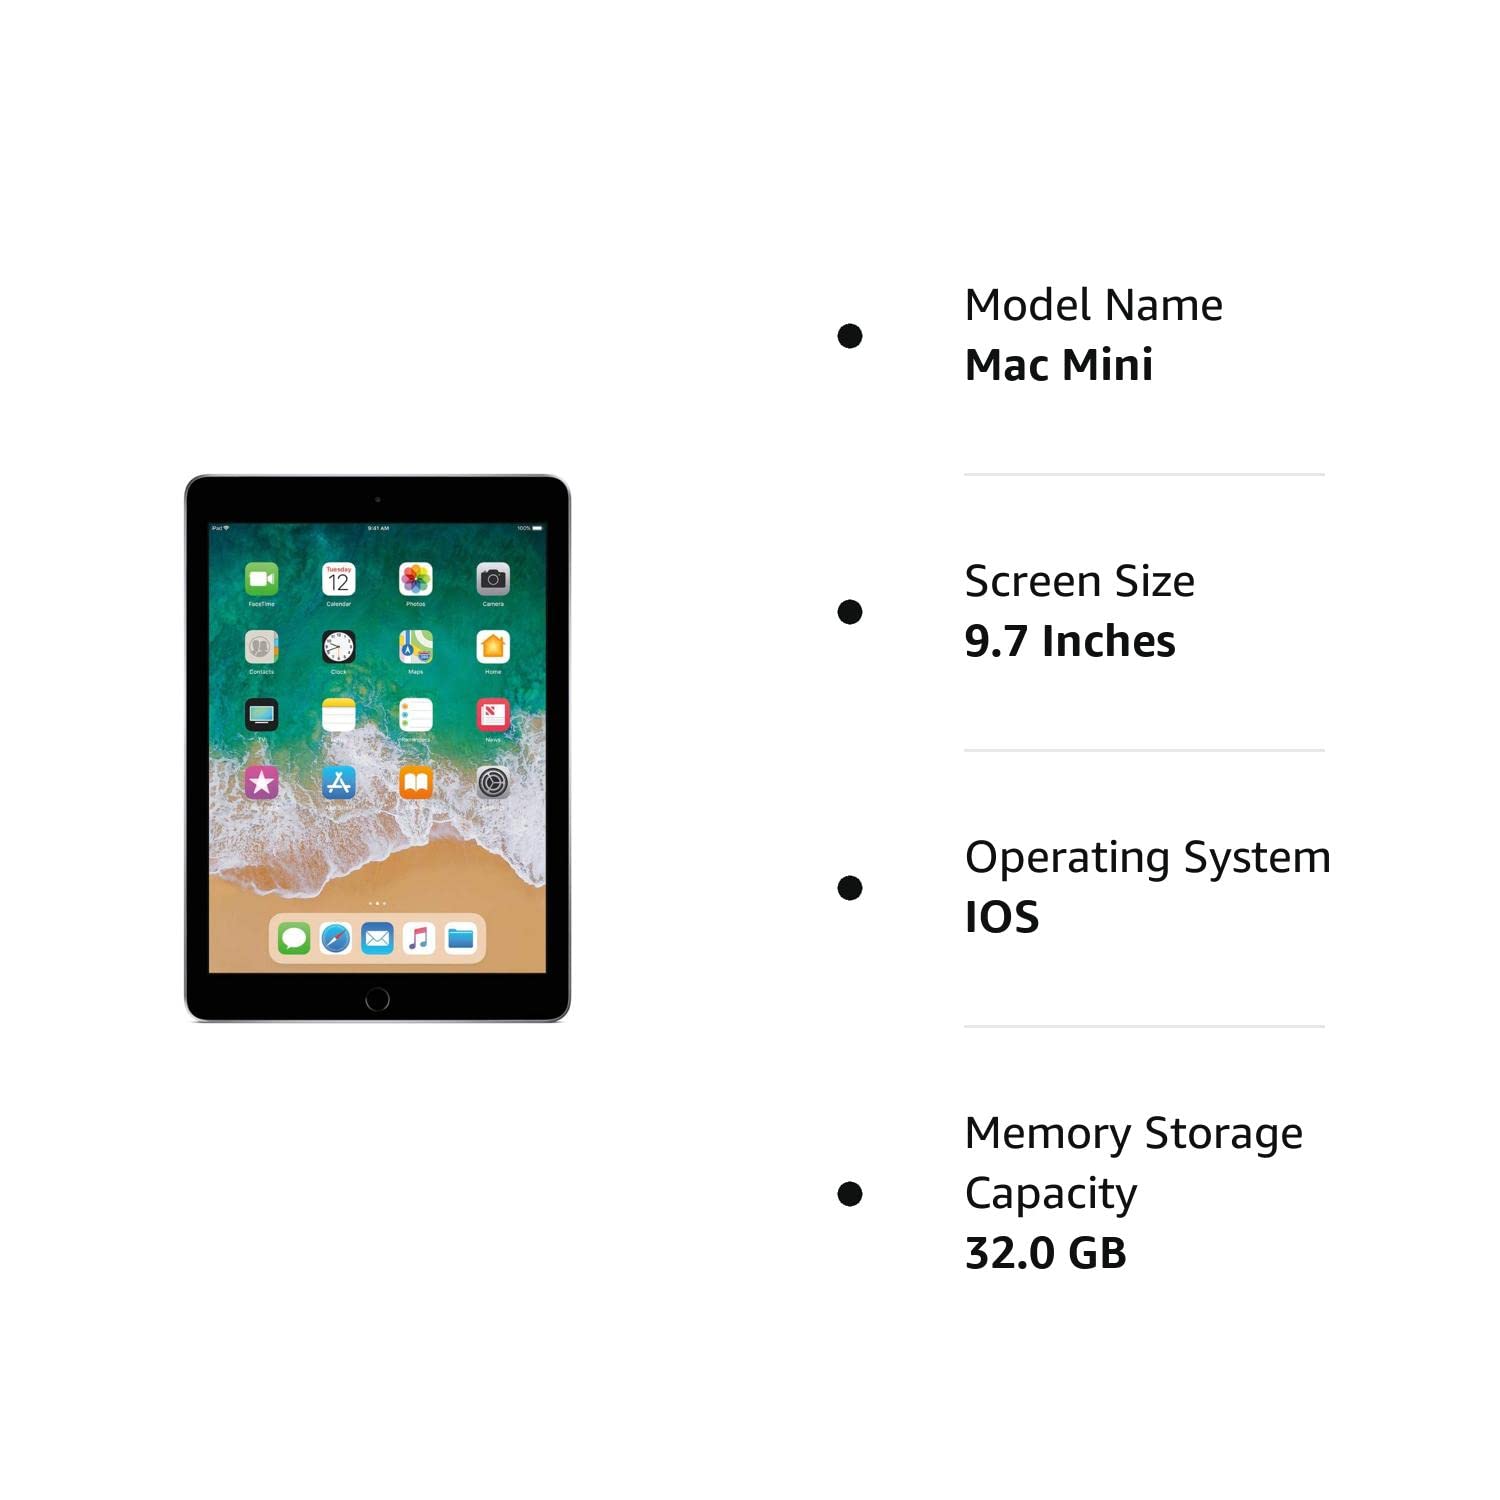 Apple iPad 9.7-inch Retina Display with WIFI, 32GB, Touch ID, 2017 Mode - Space Gray (Renewed)